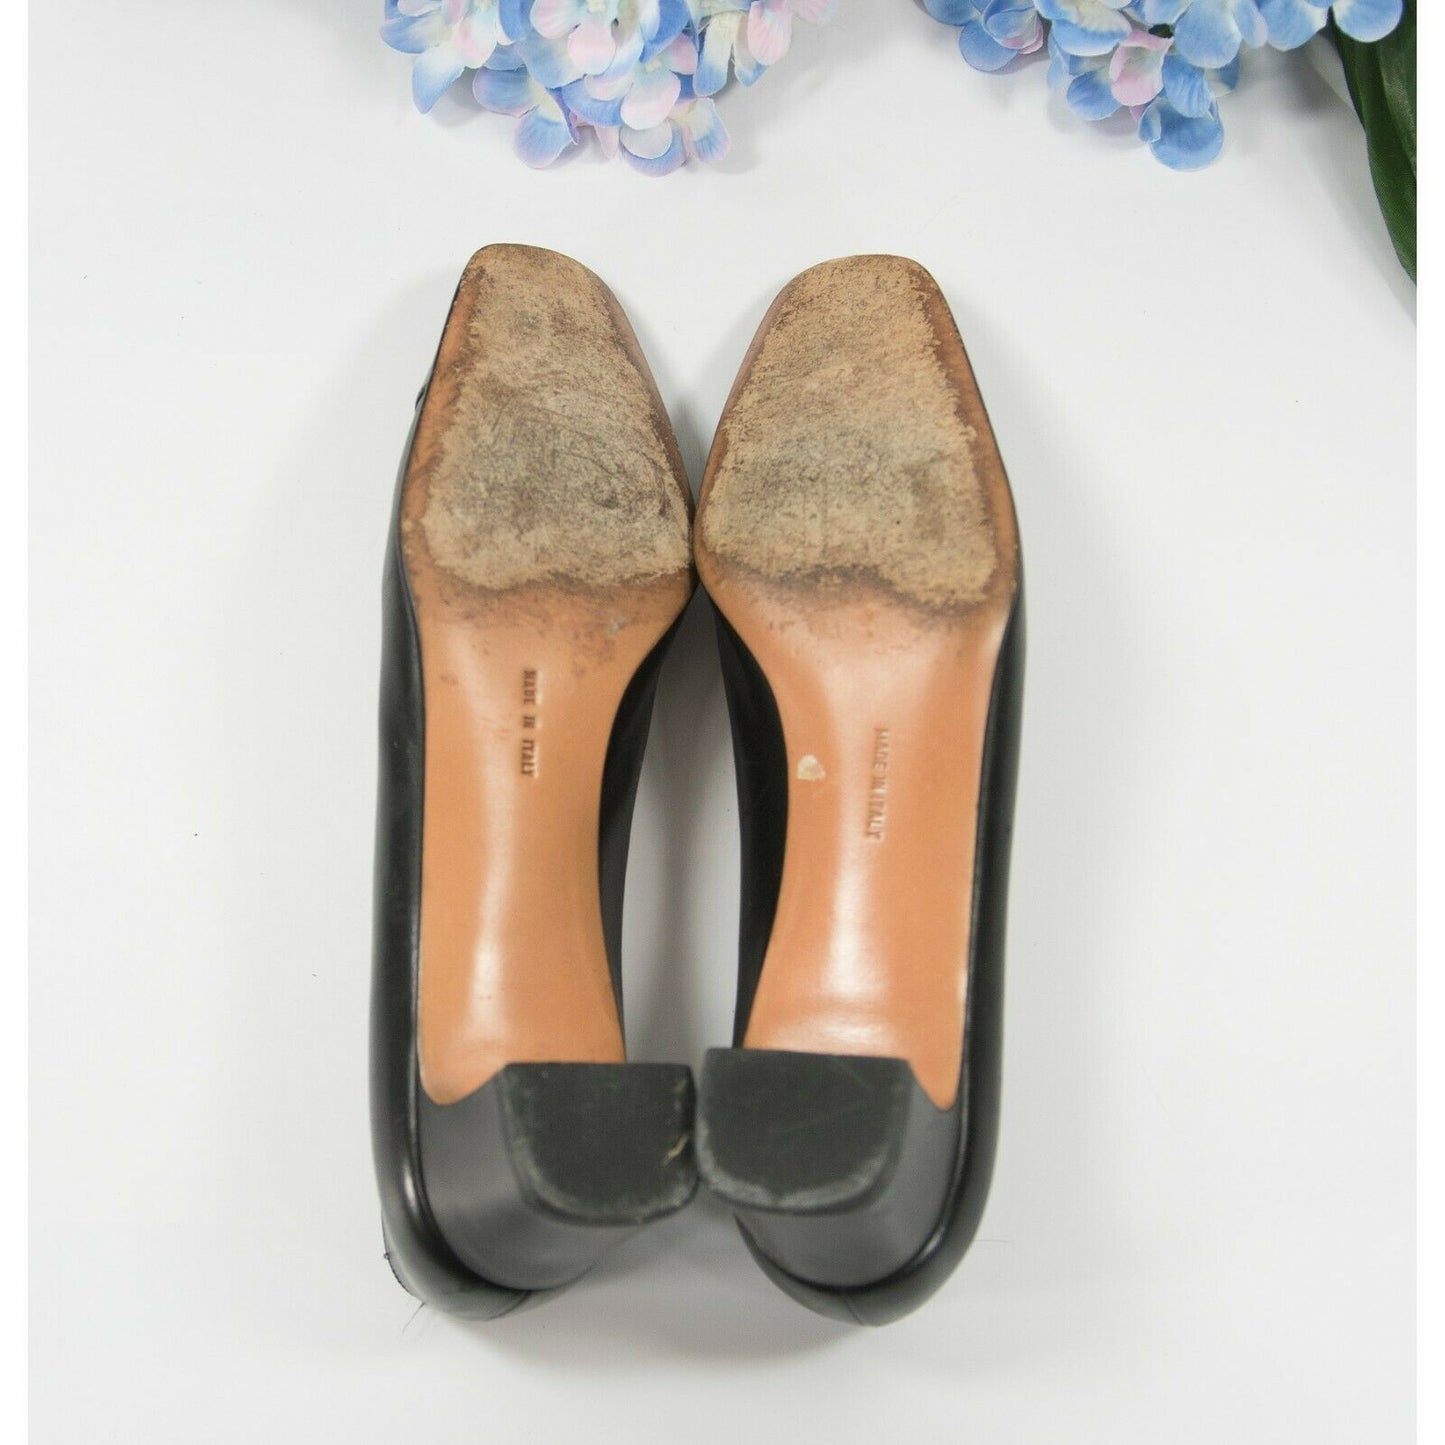 Salvatore Ferragamo DQ61519 Black Leather Low Heels Shoes Size 8.5 Extra Narrow